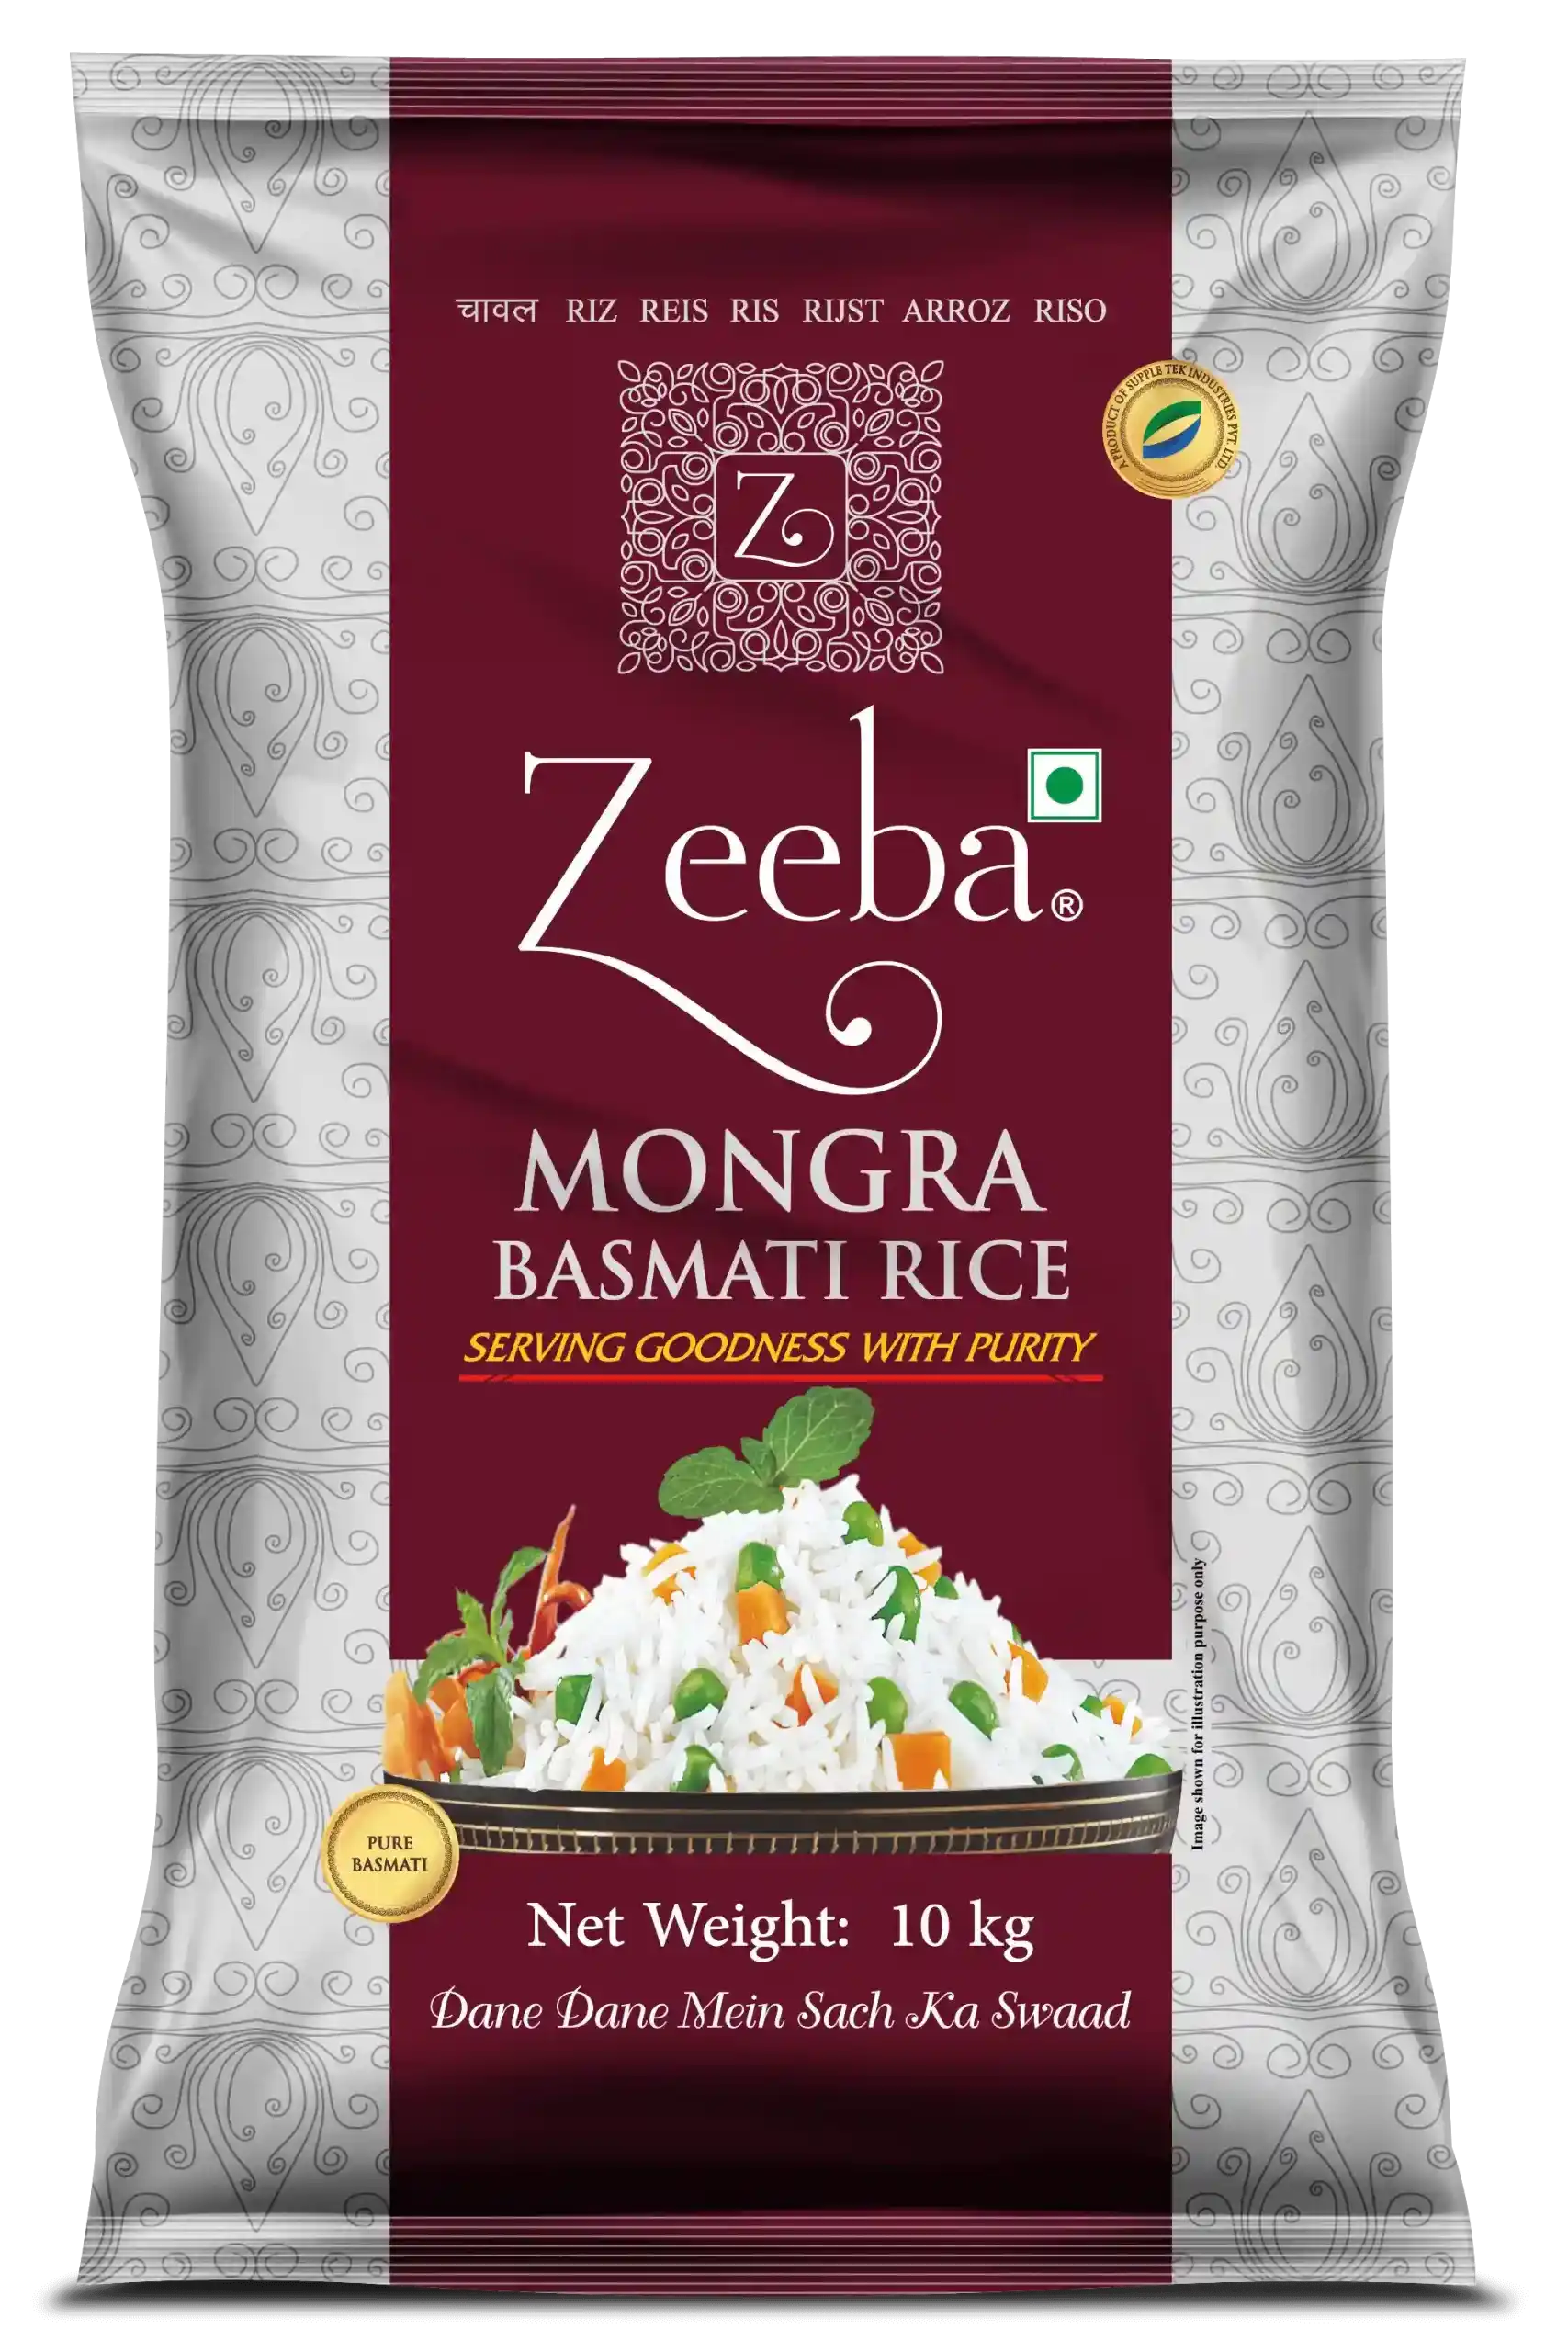 Zeeba Super Mongra Basmati Rice